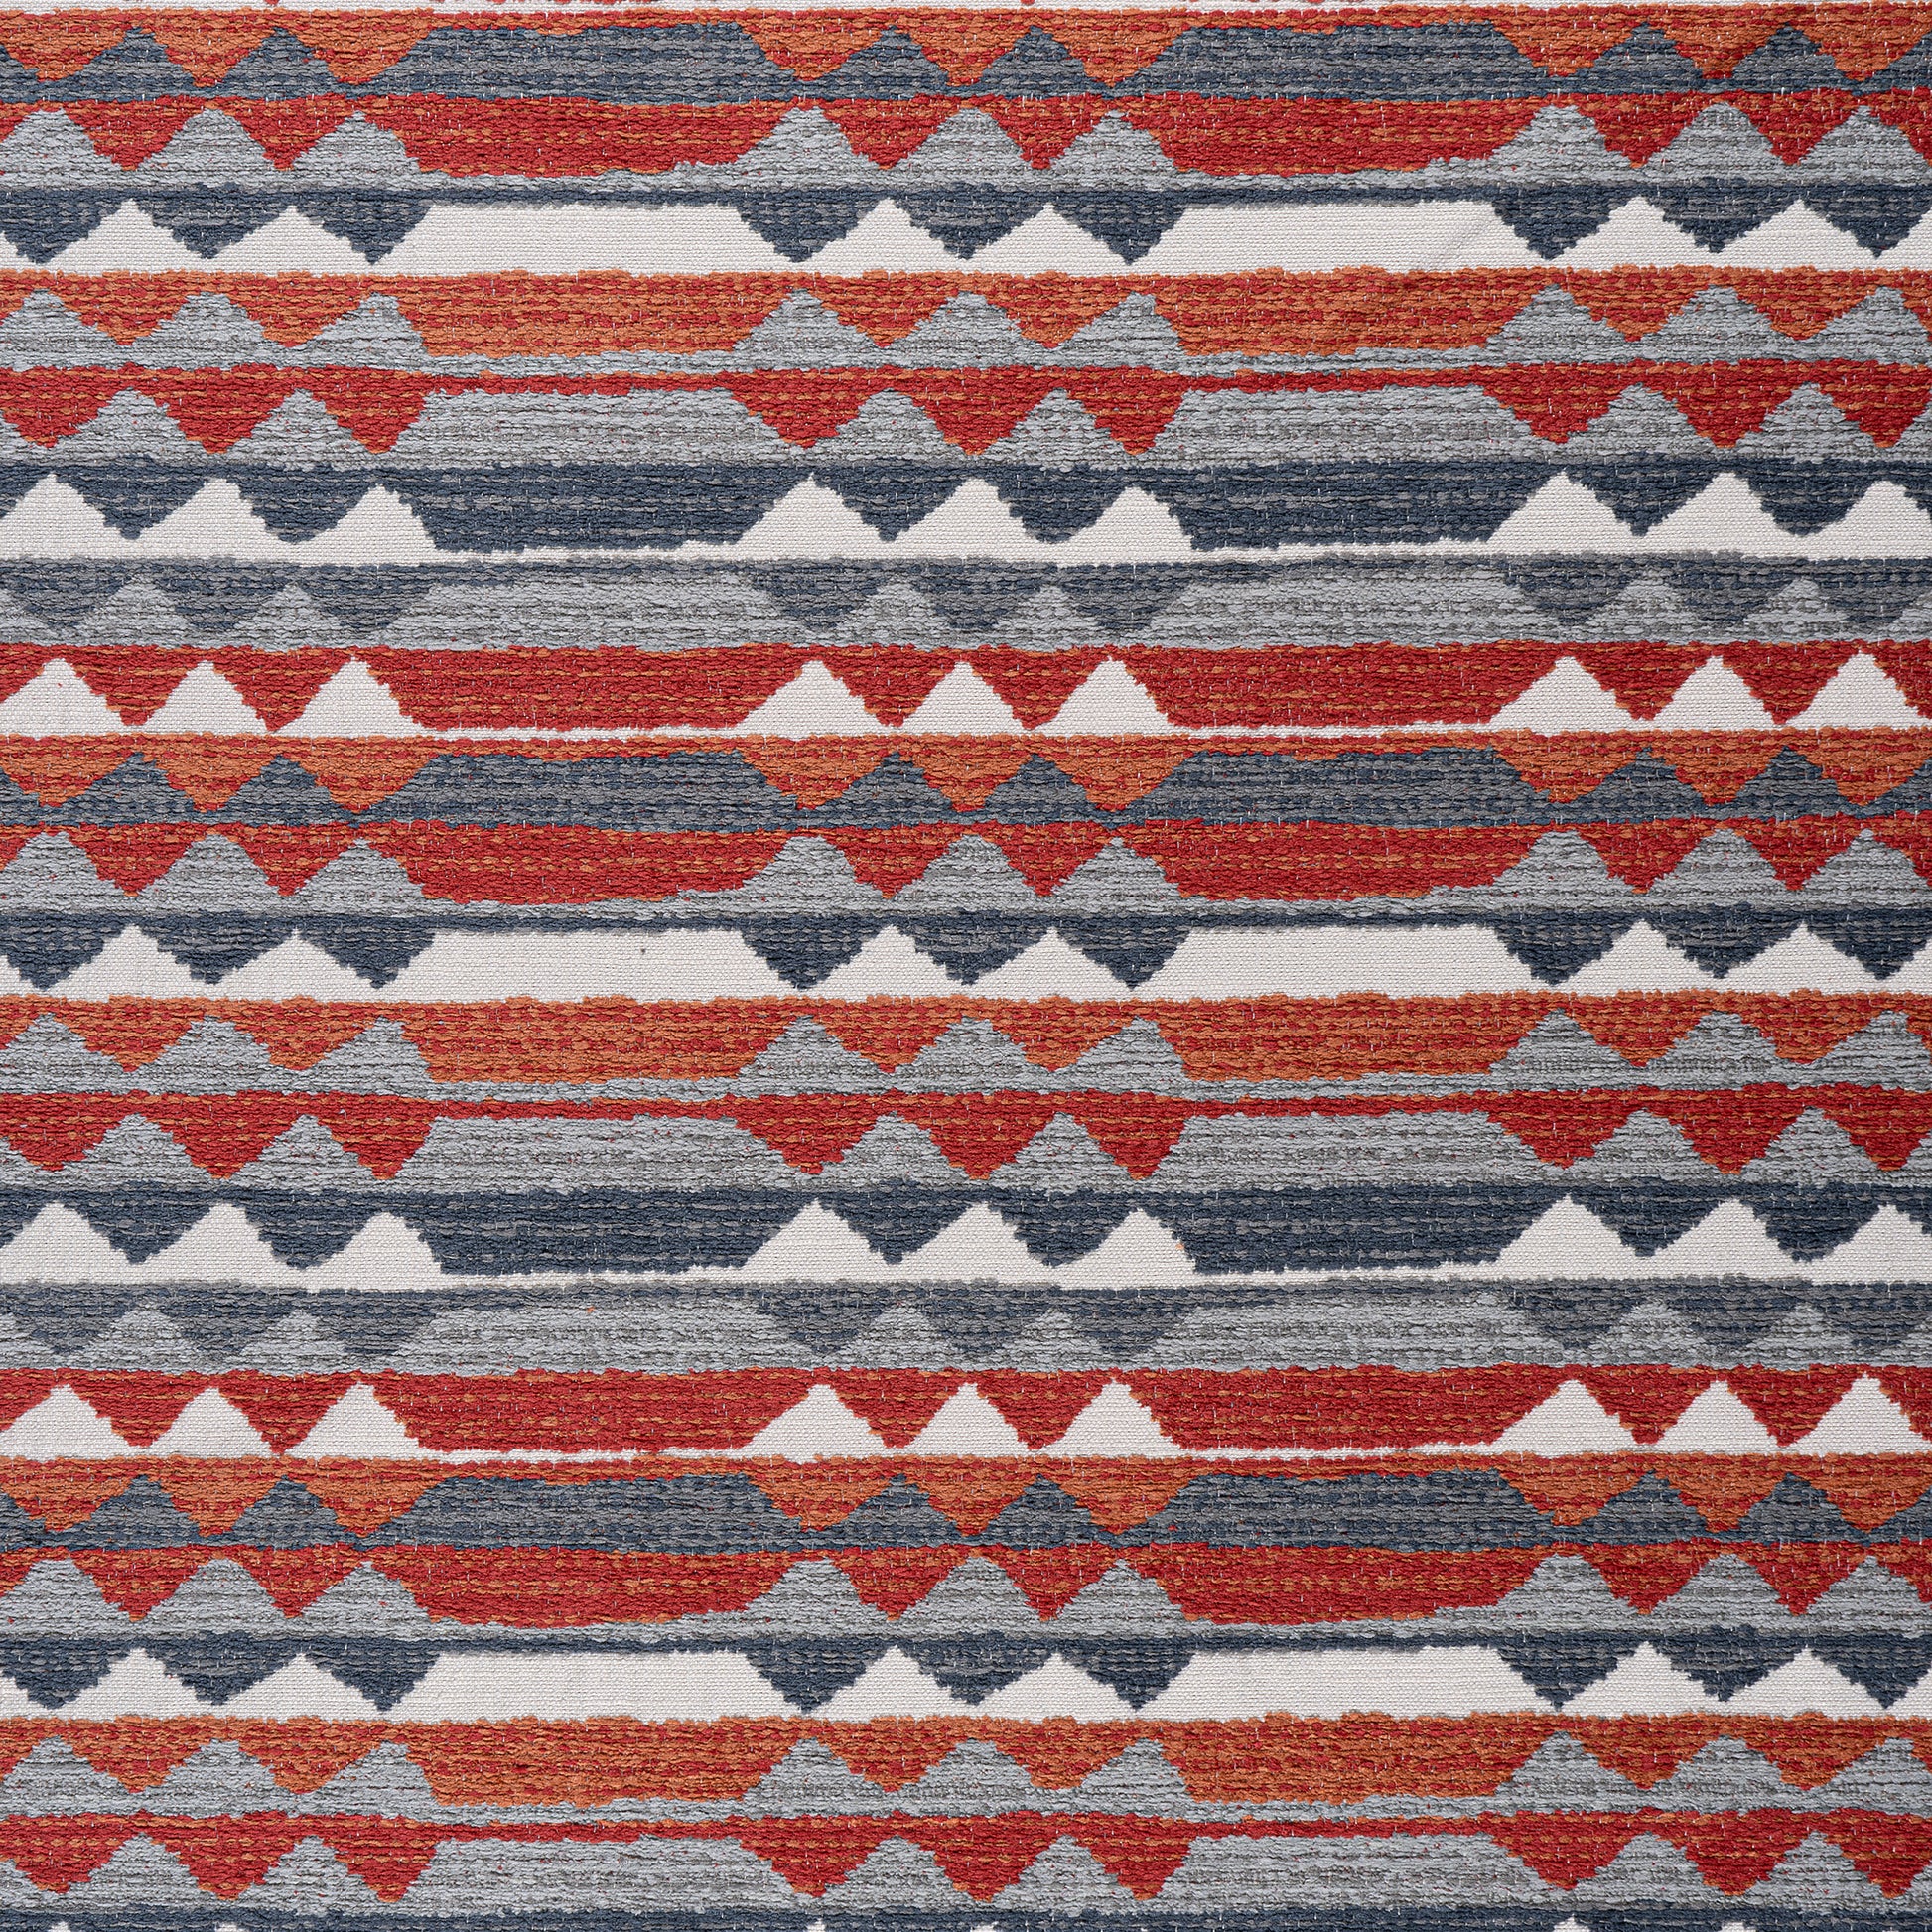 Purchase Thibaut Fabric SKU W78378 pattern name Saranac color Campfire